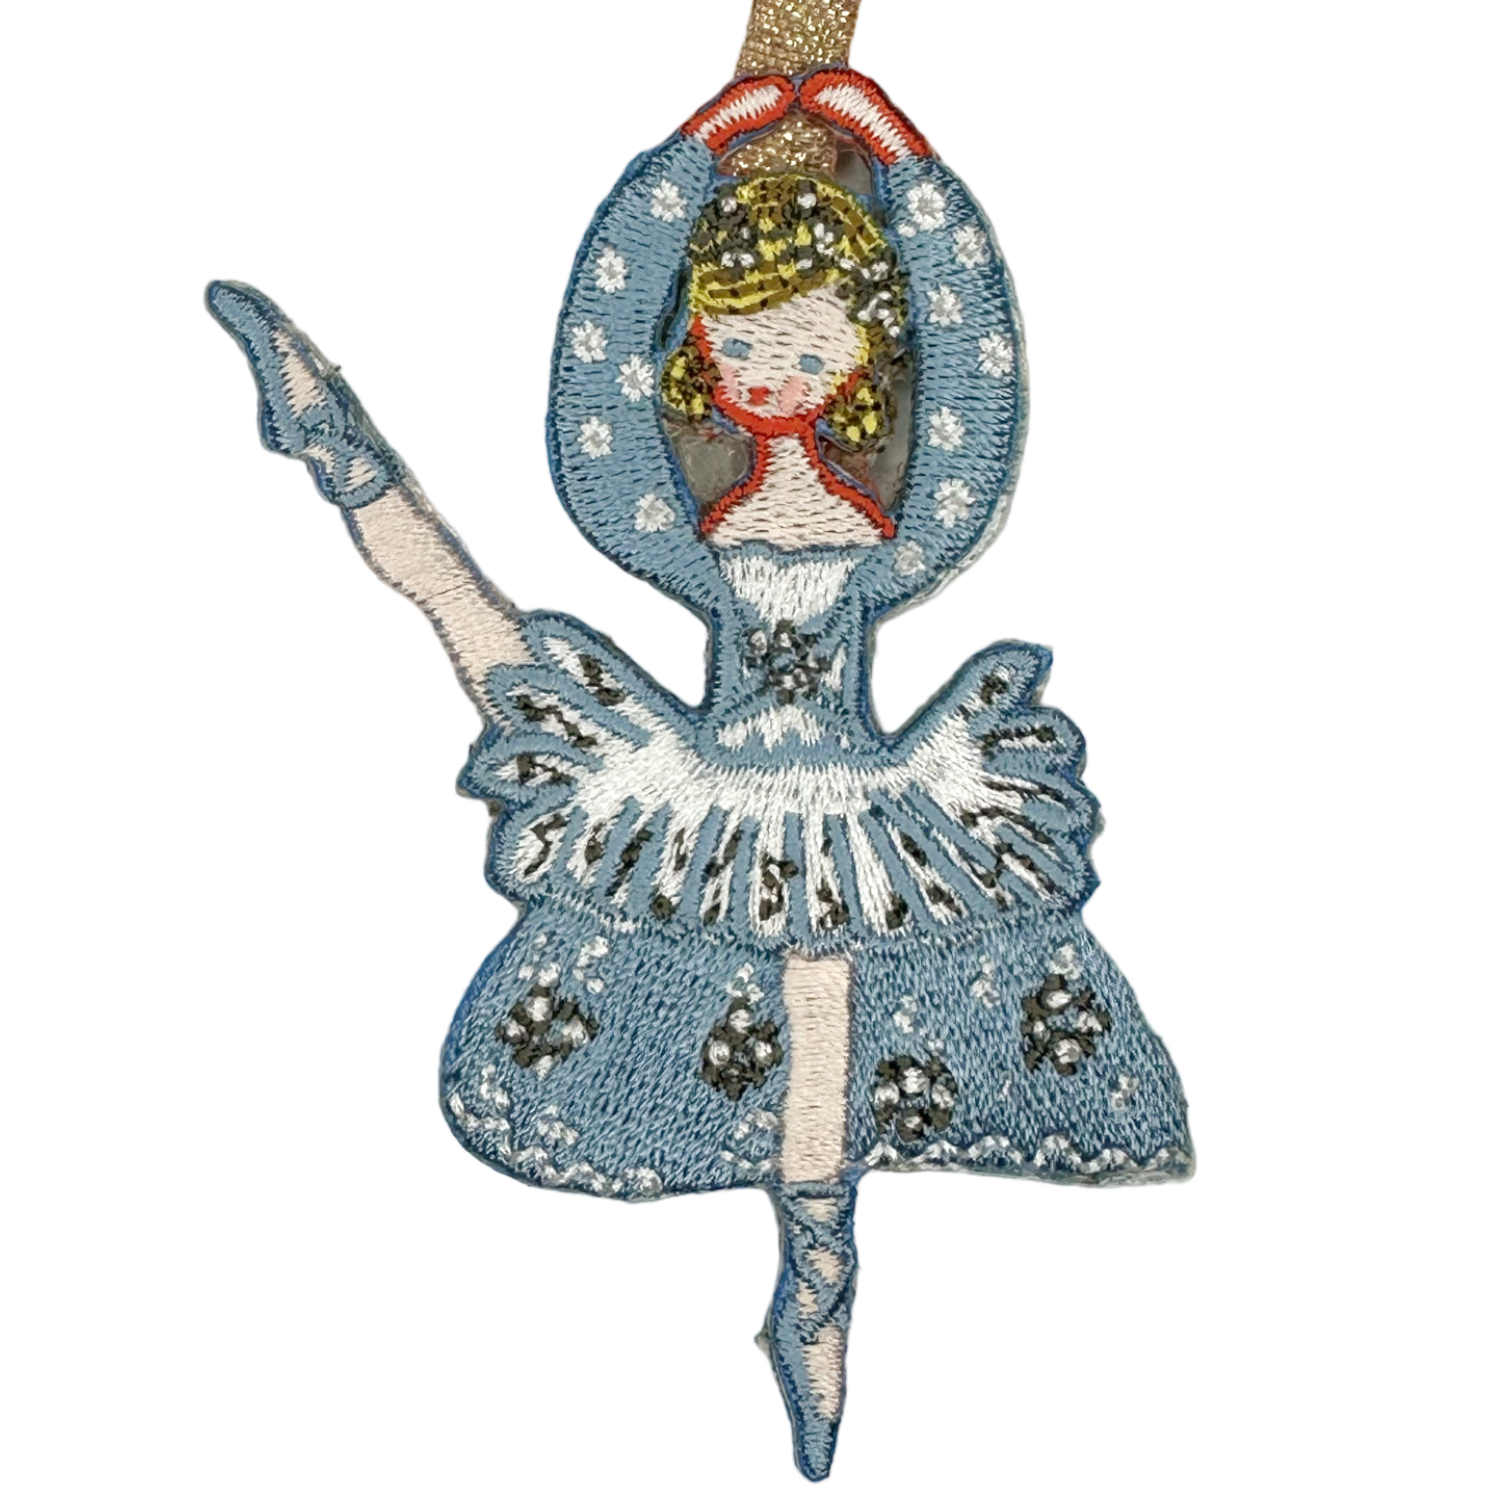 Nutcracker Embroidered Ornament - Clara - Premium  from Tricia Lowenfield Design 